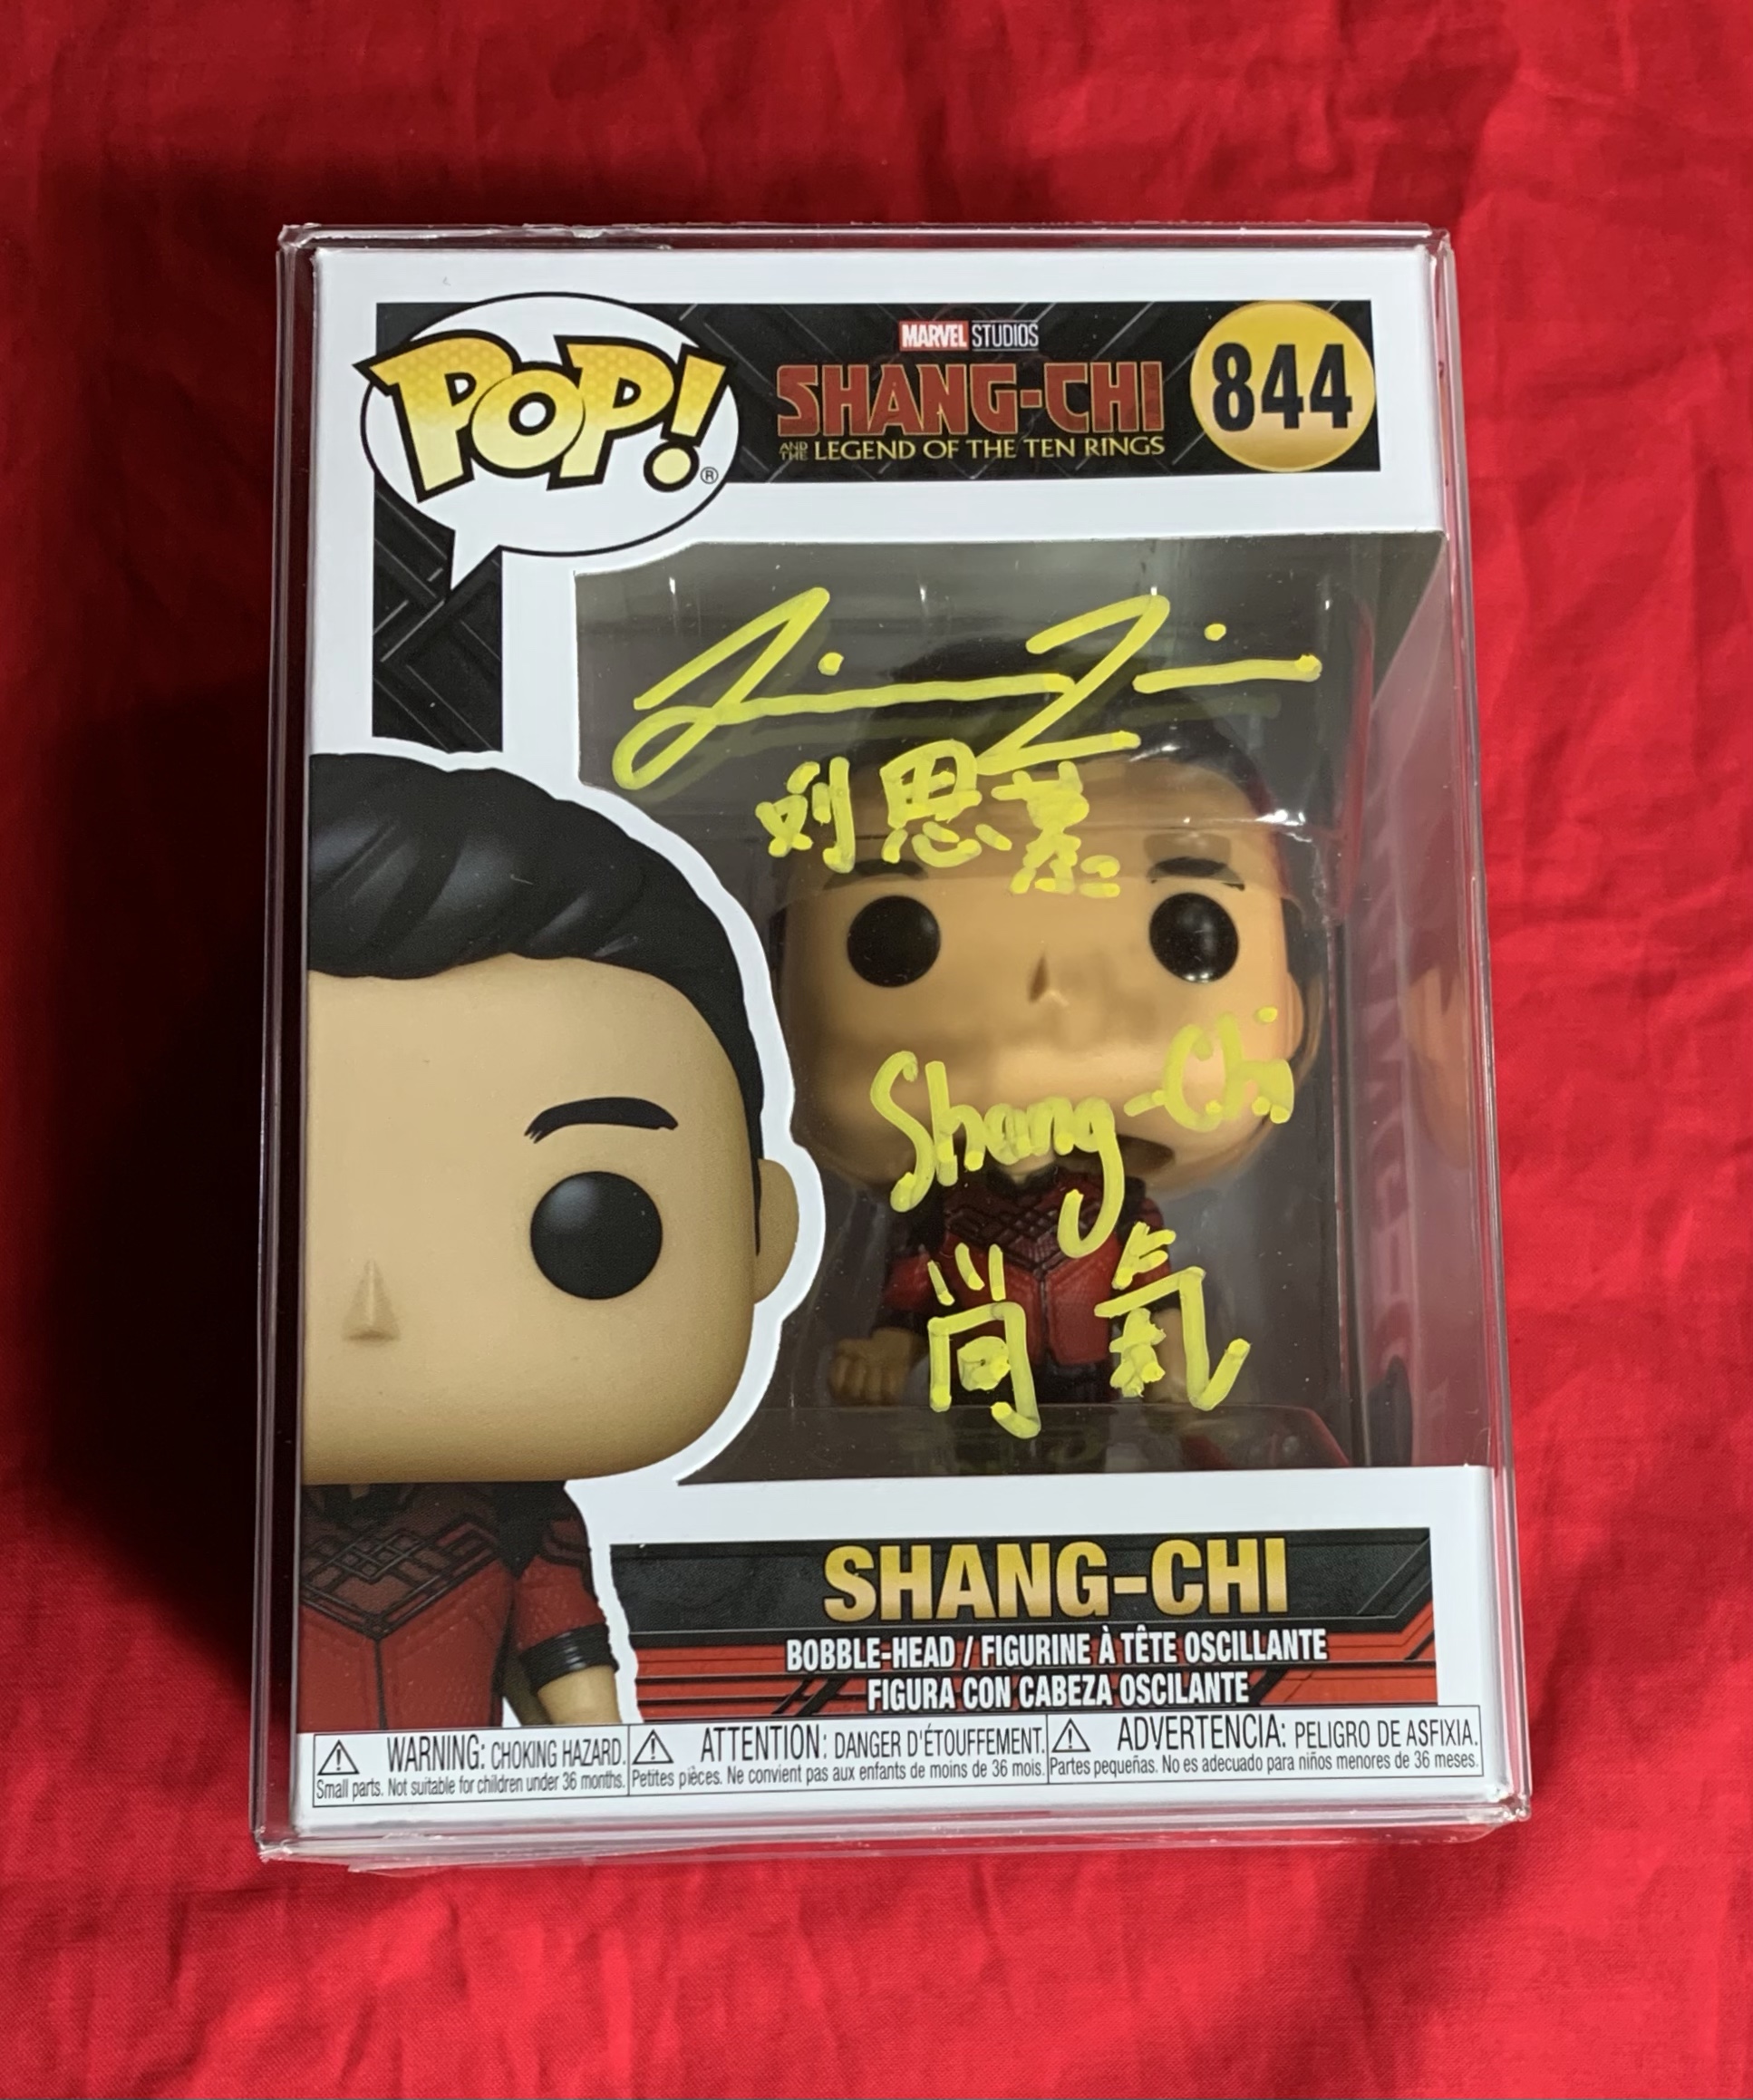 843 Shang-Chi - Funko Pop Price